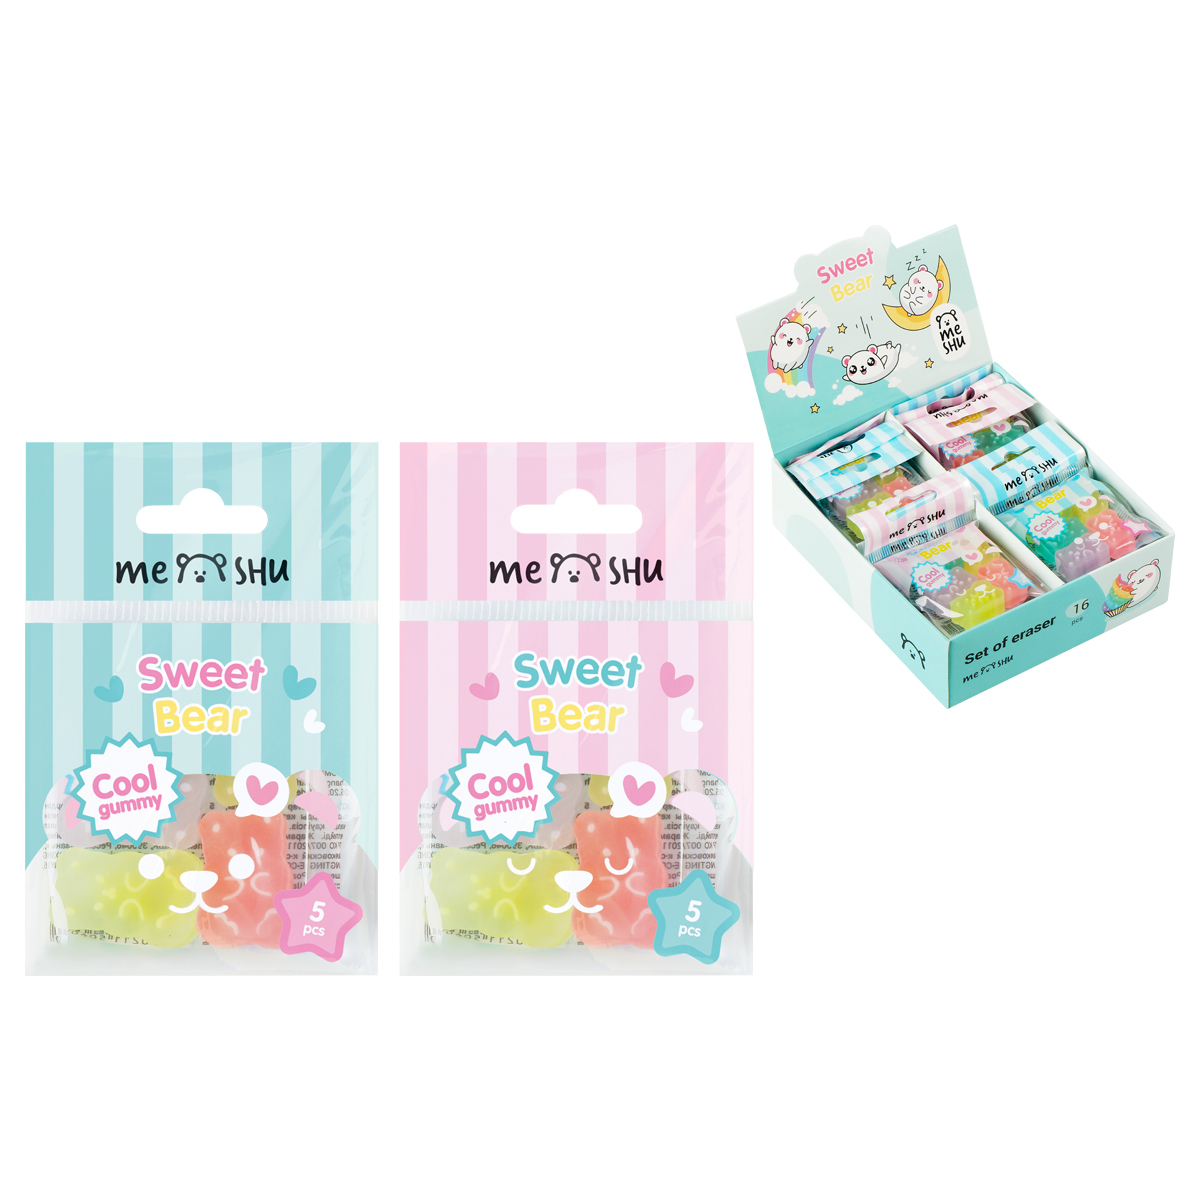   MESHU "Candy Bear" 5., , 20*15*9